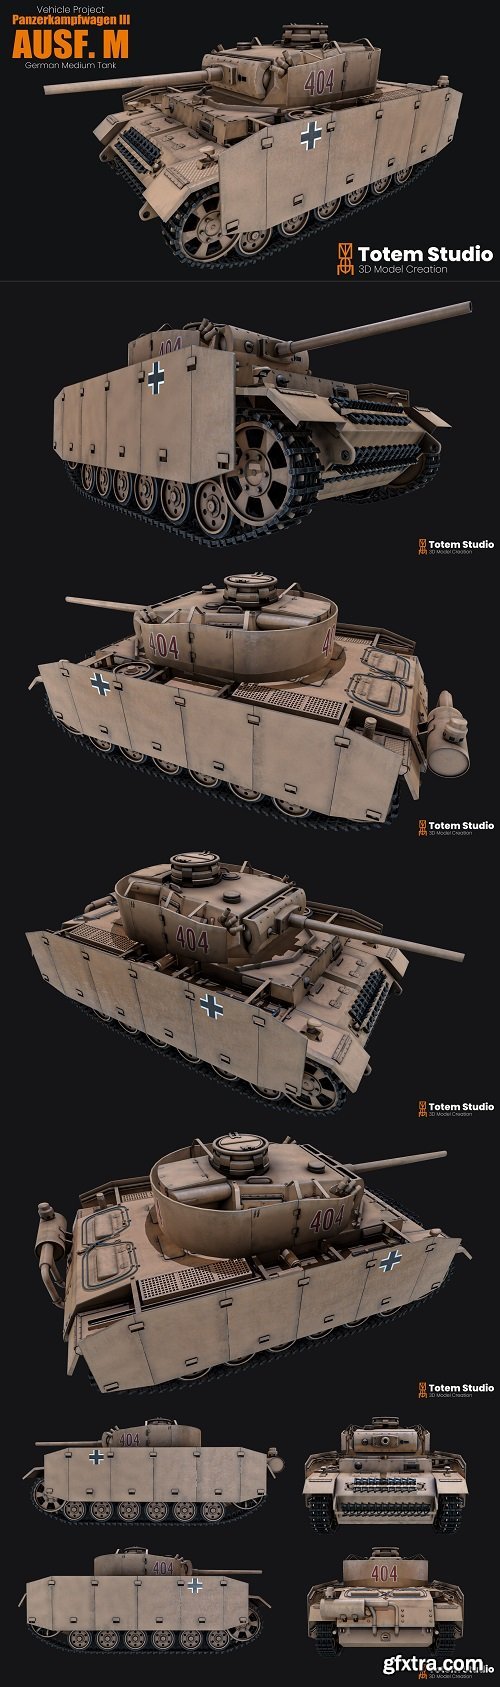 Panzerkampfwagen III AUSF. M German Medium Tank